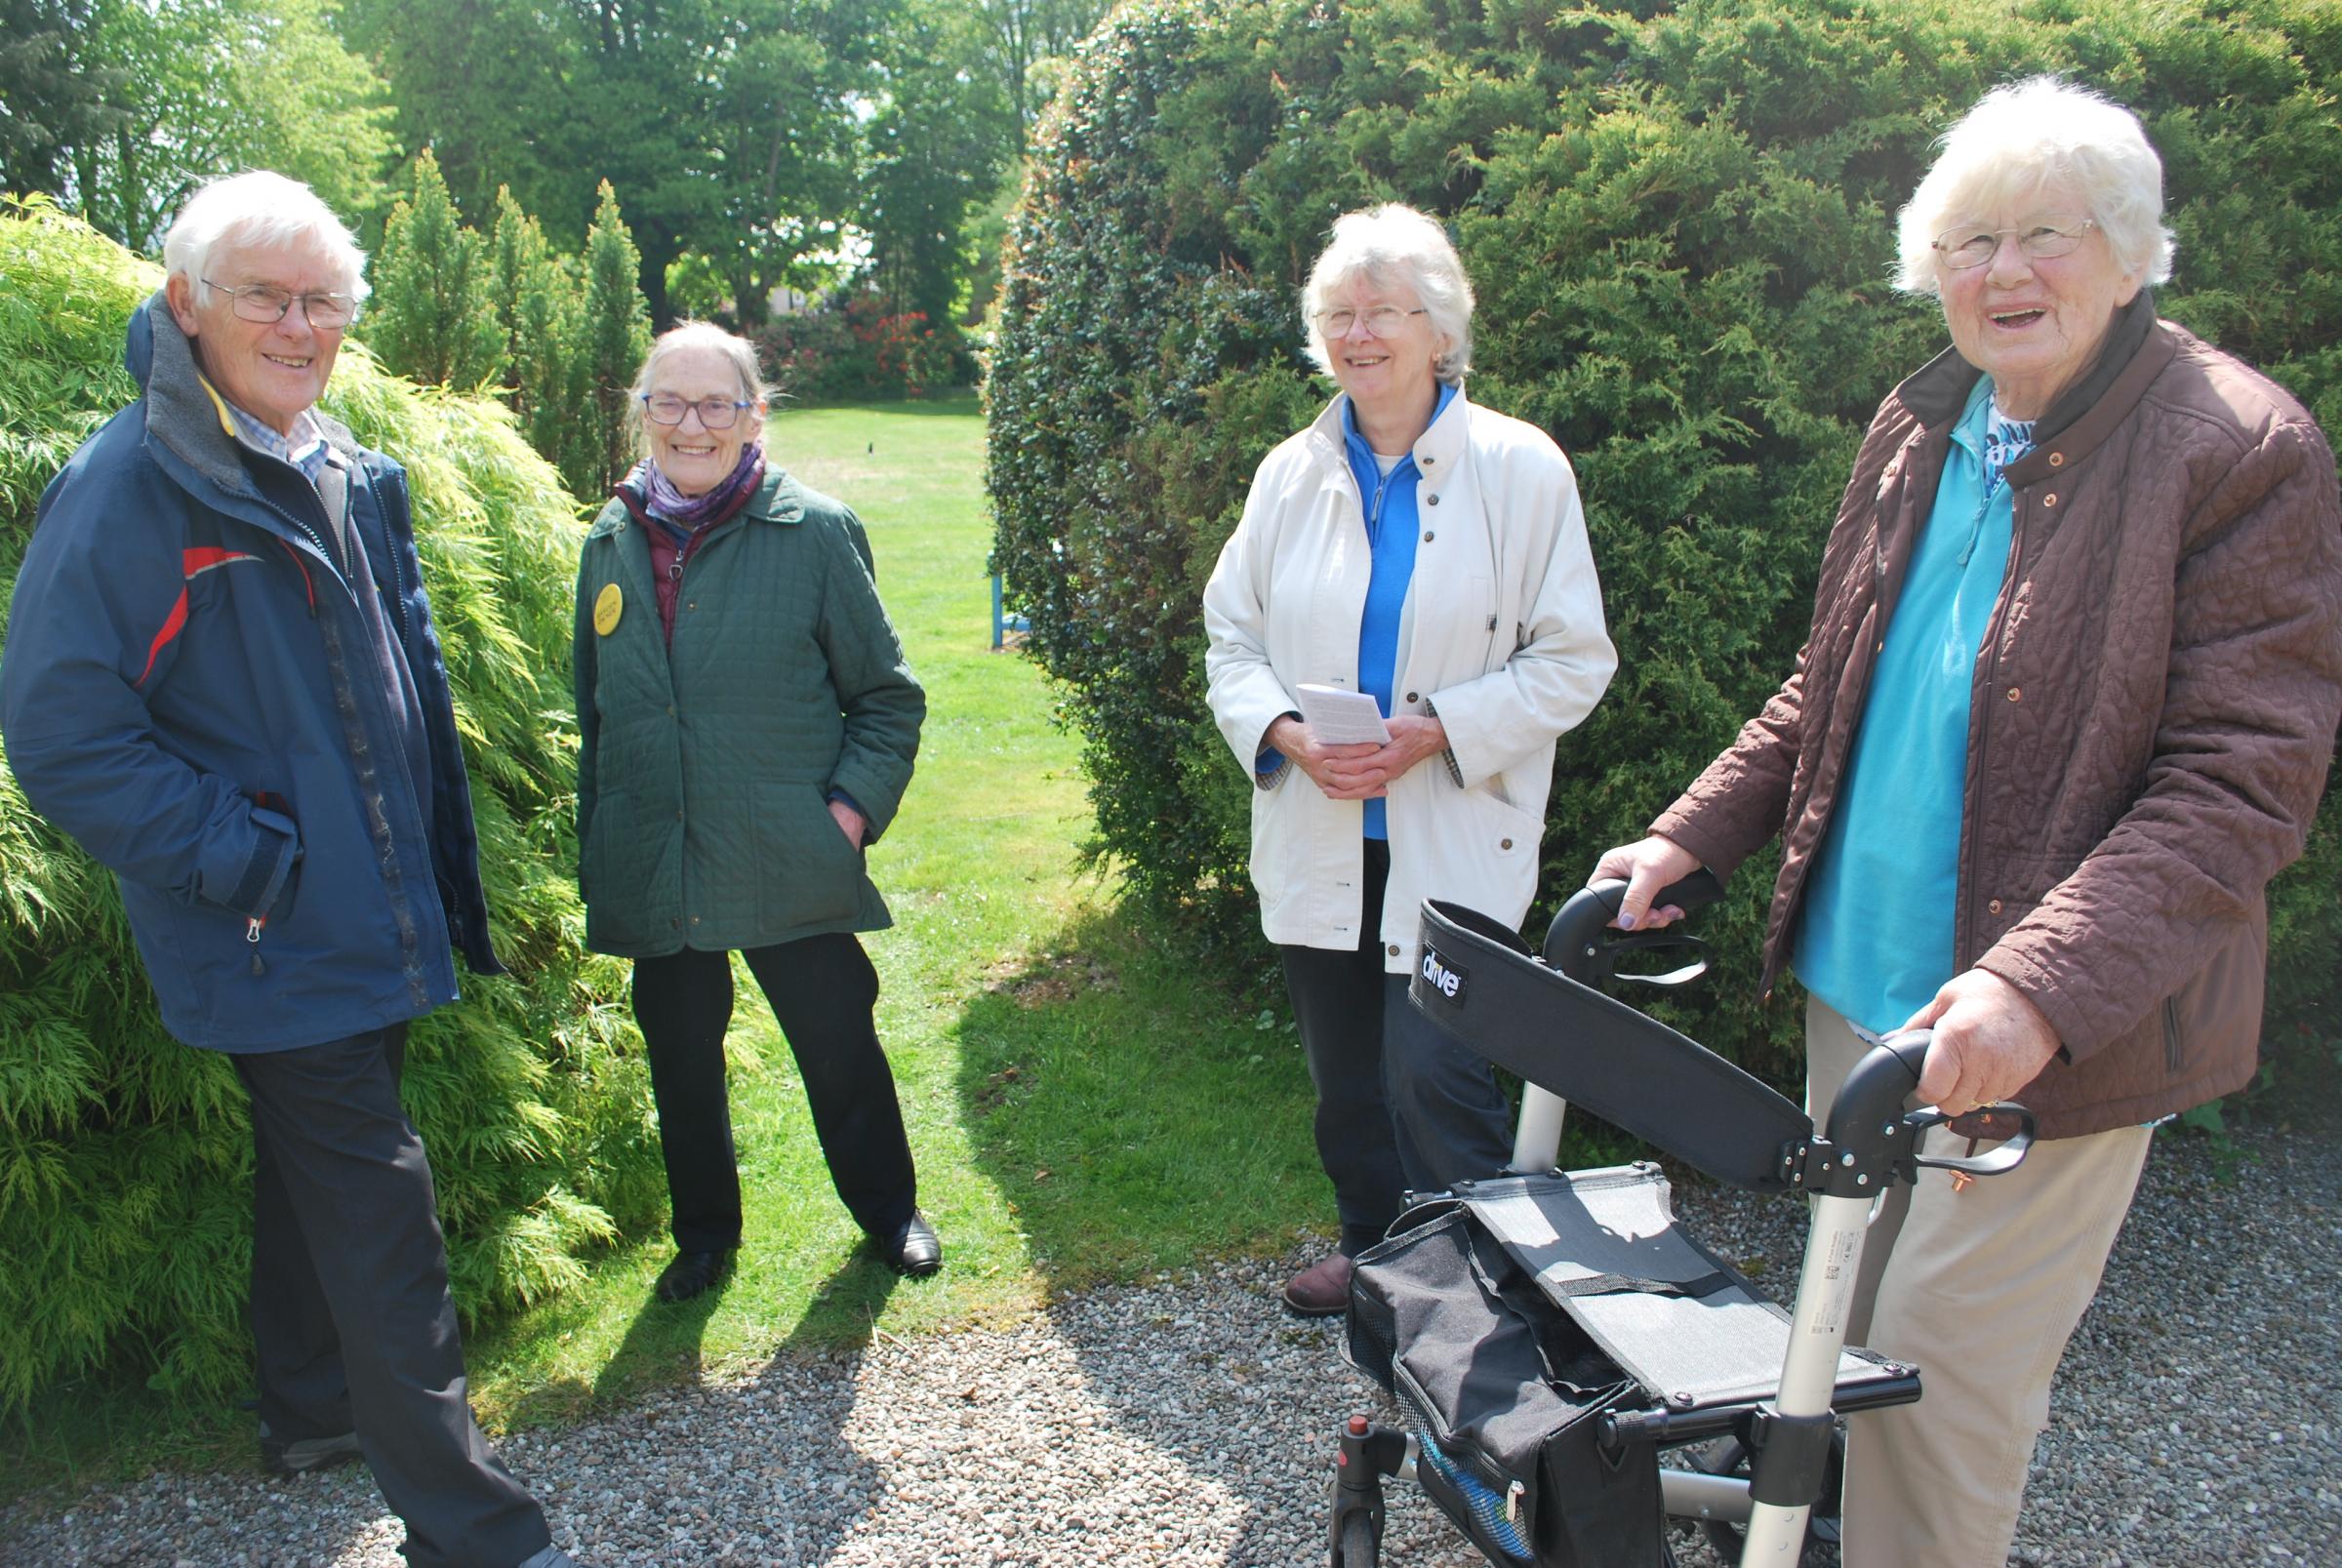 Reay MacKay, Sheila Baker garden owner, Jean MacKay and Margaret Horrel at Westburn